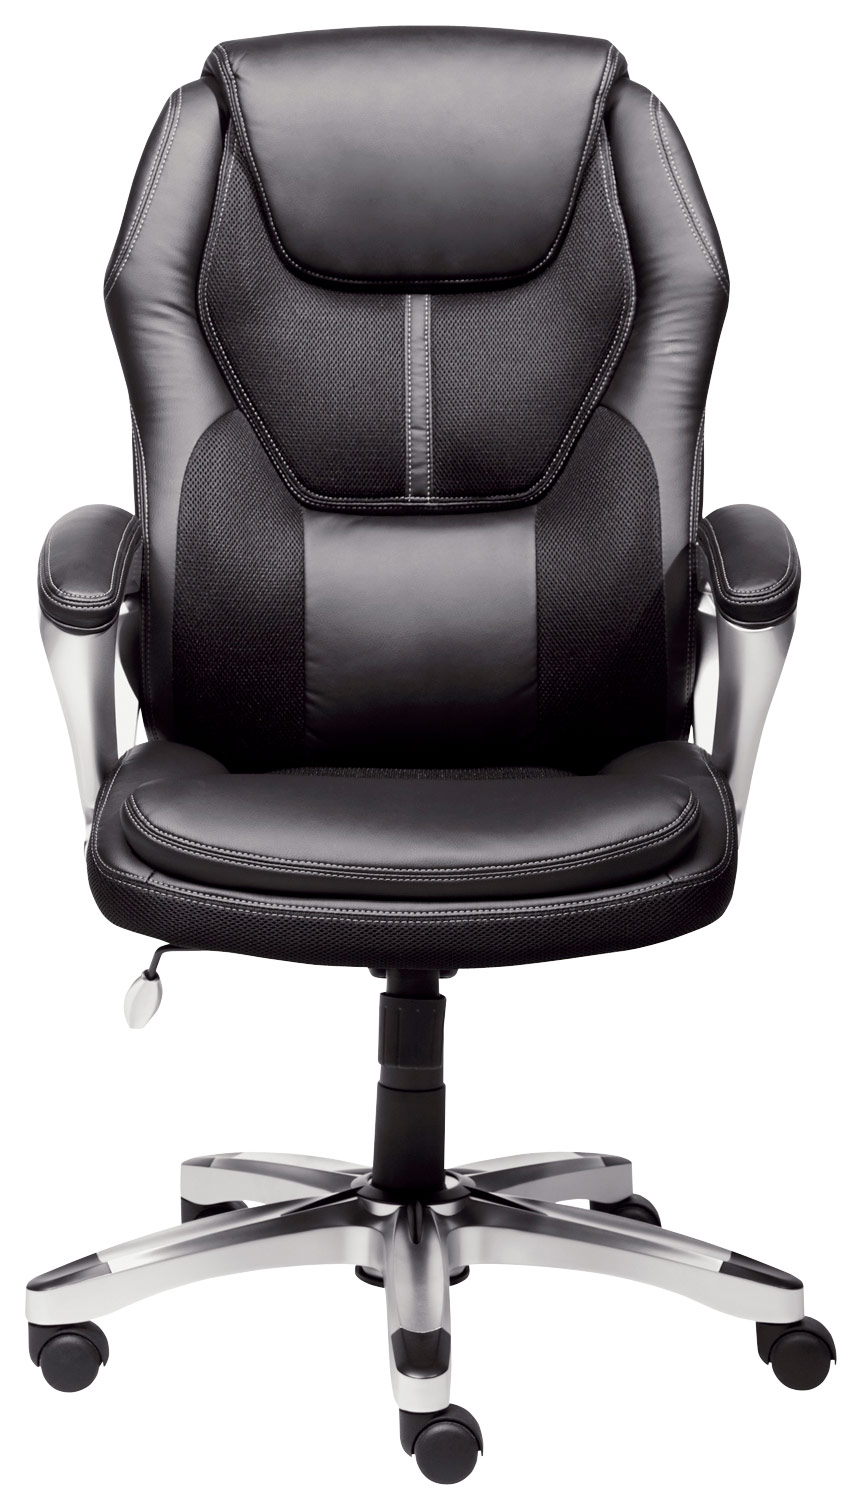 Serta Executive Office Chair Black 43673 Best Buy